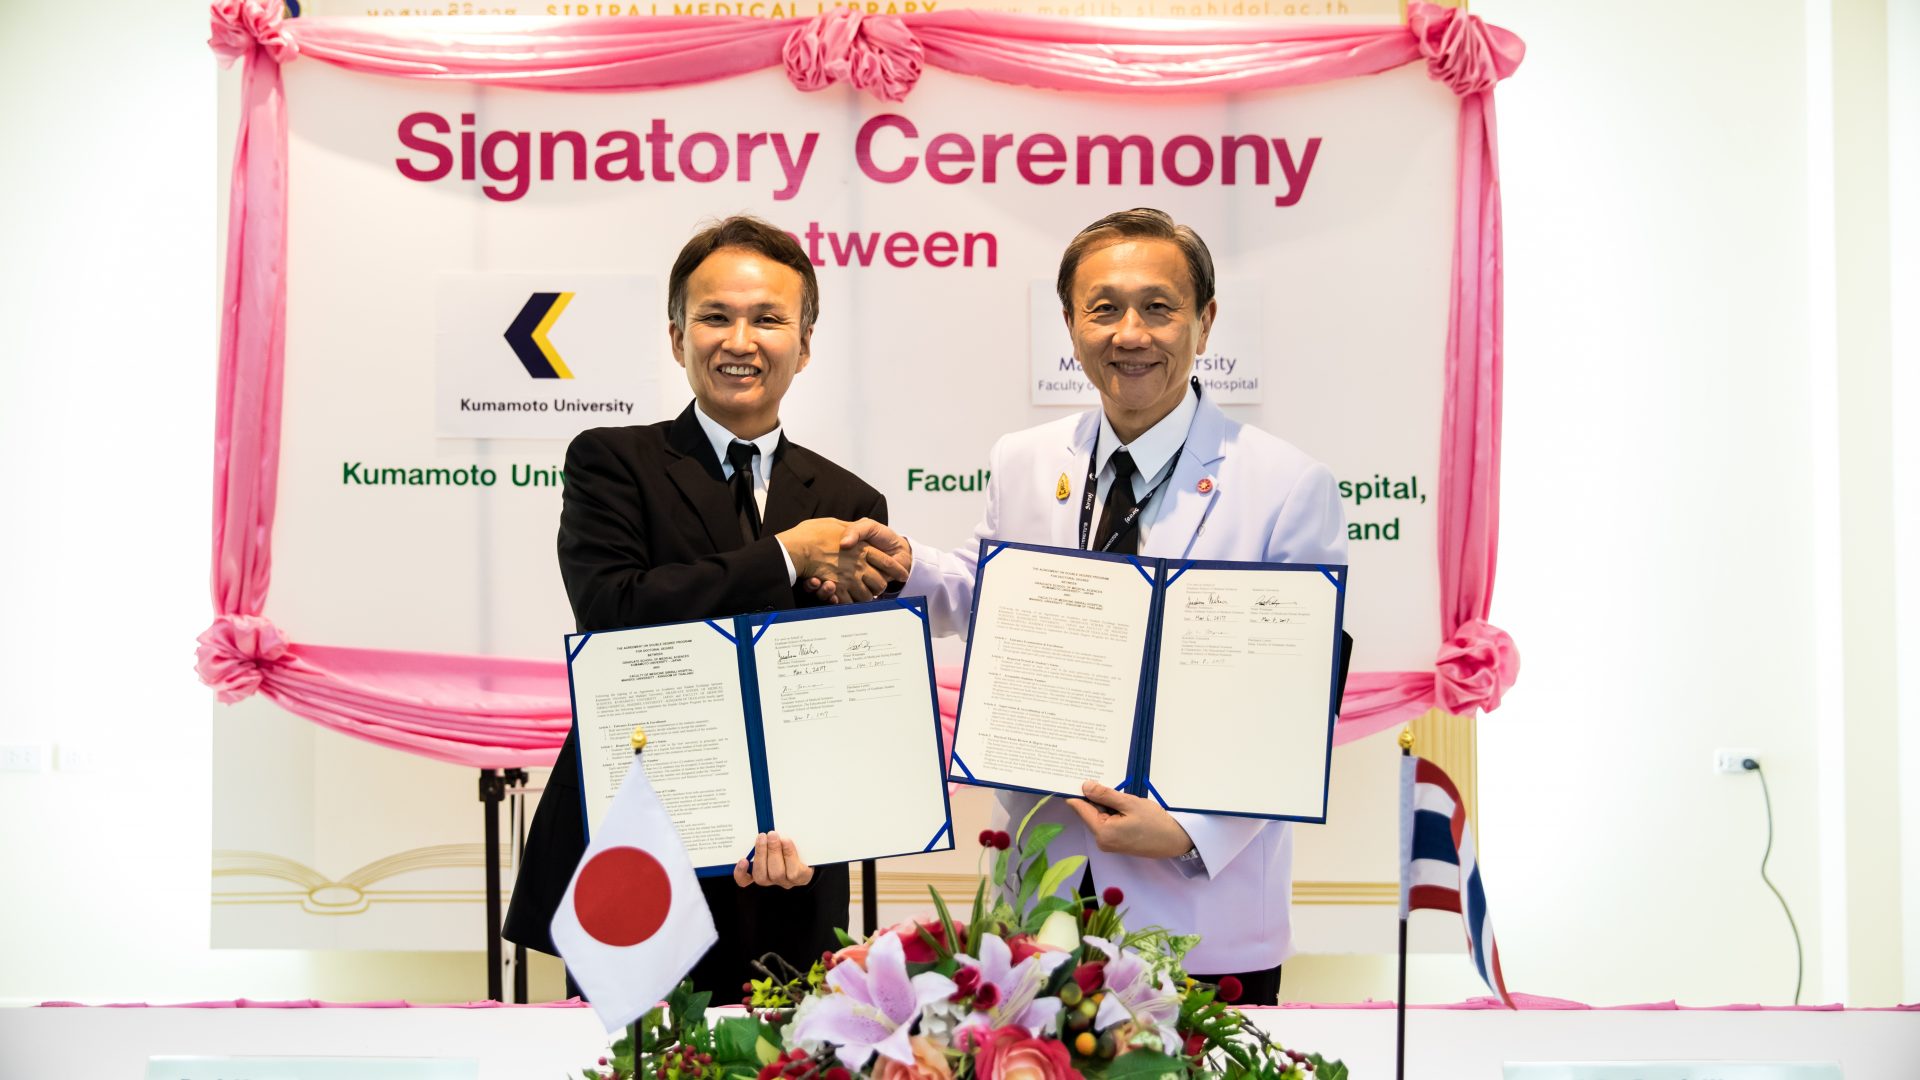 MOU Signing Ceremony between Siriraj and Kumamoto University